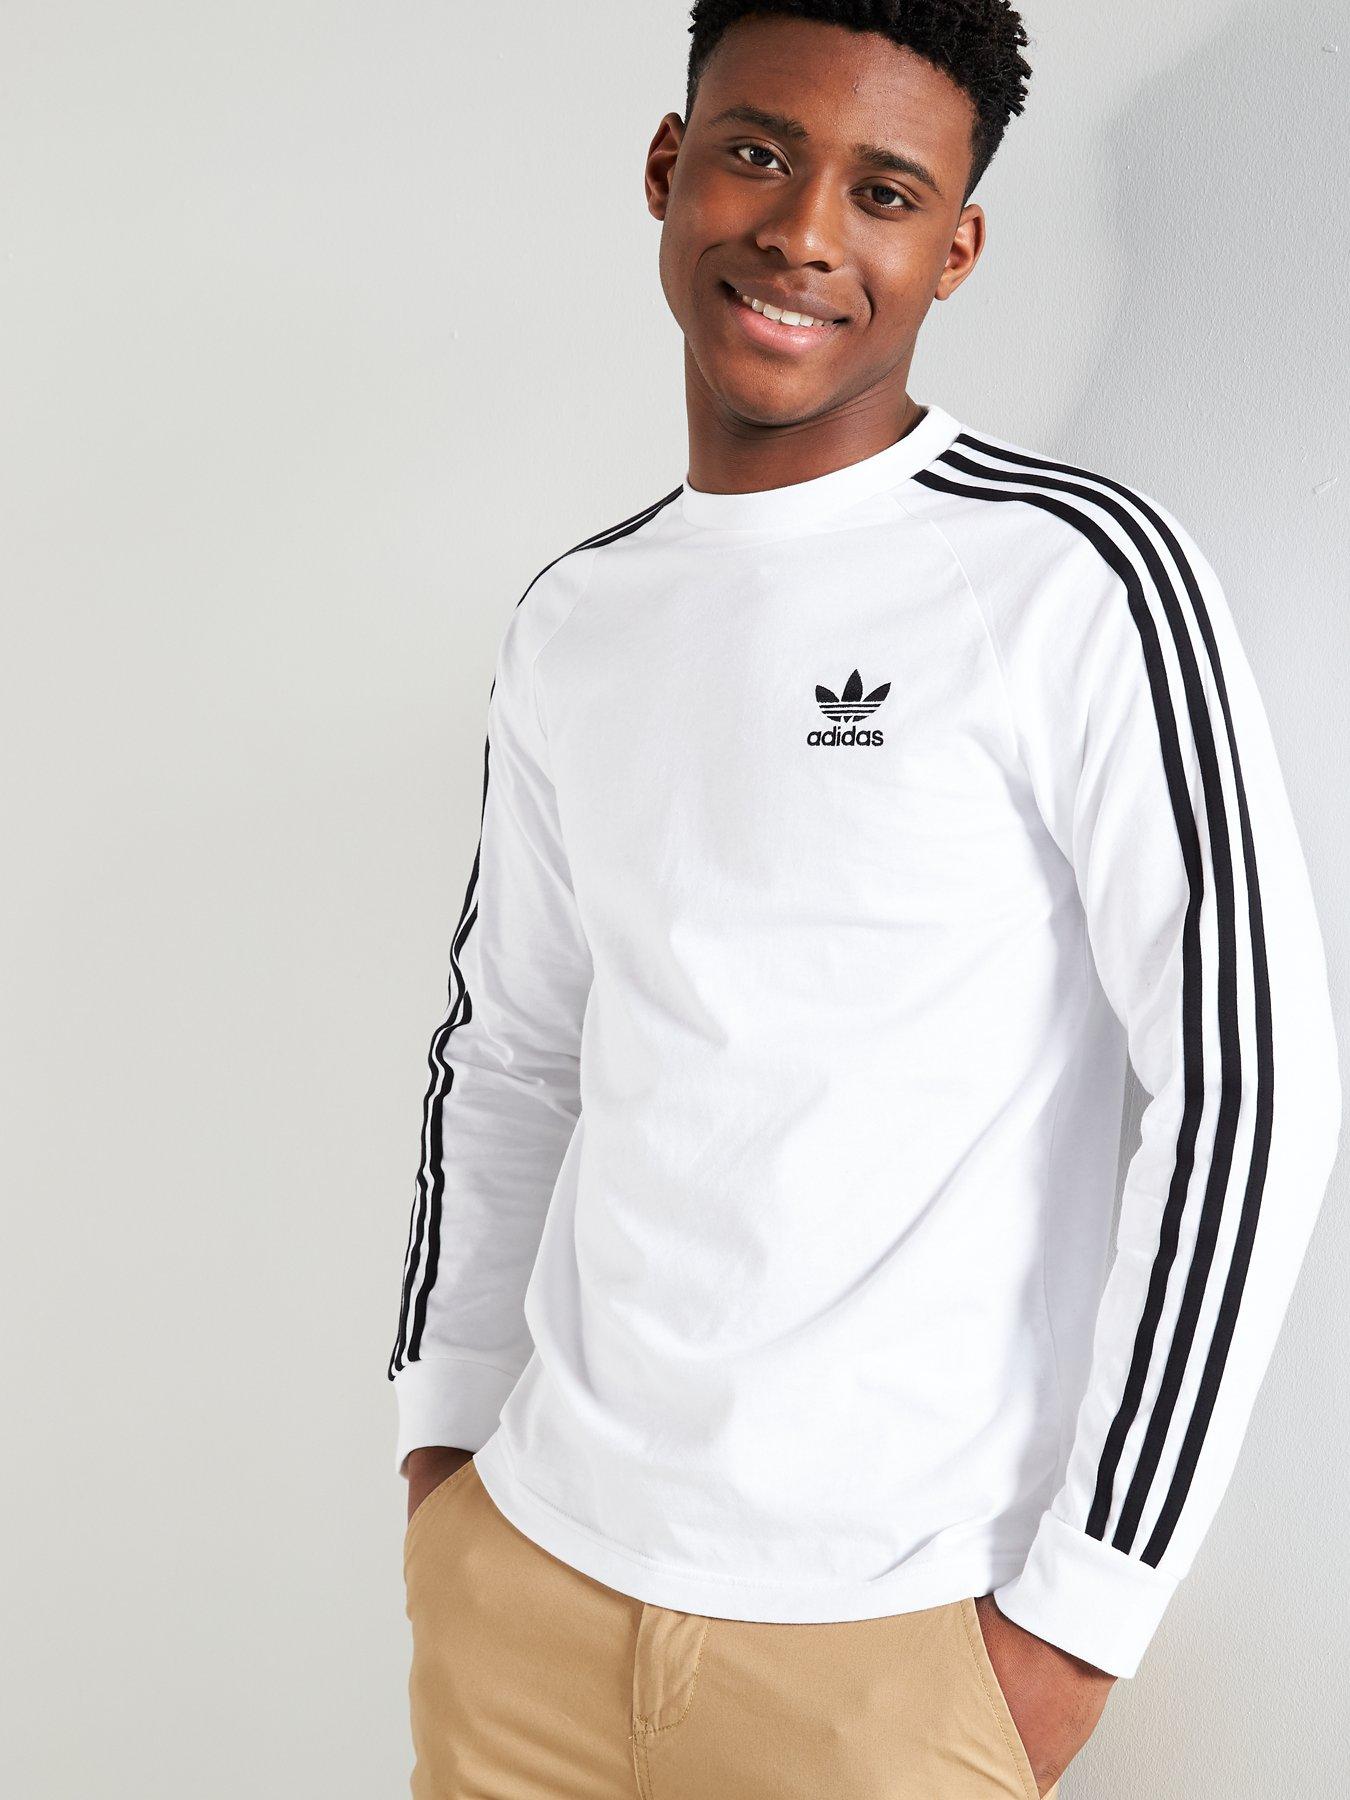 adidas shirt with stripes on sleeve